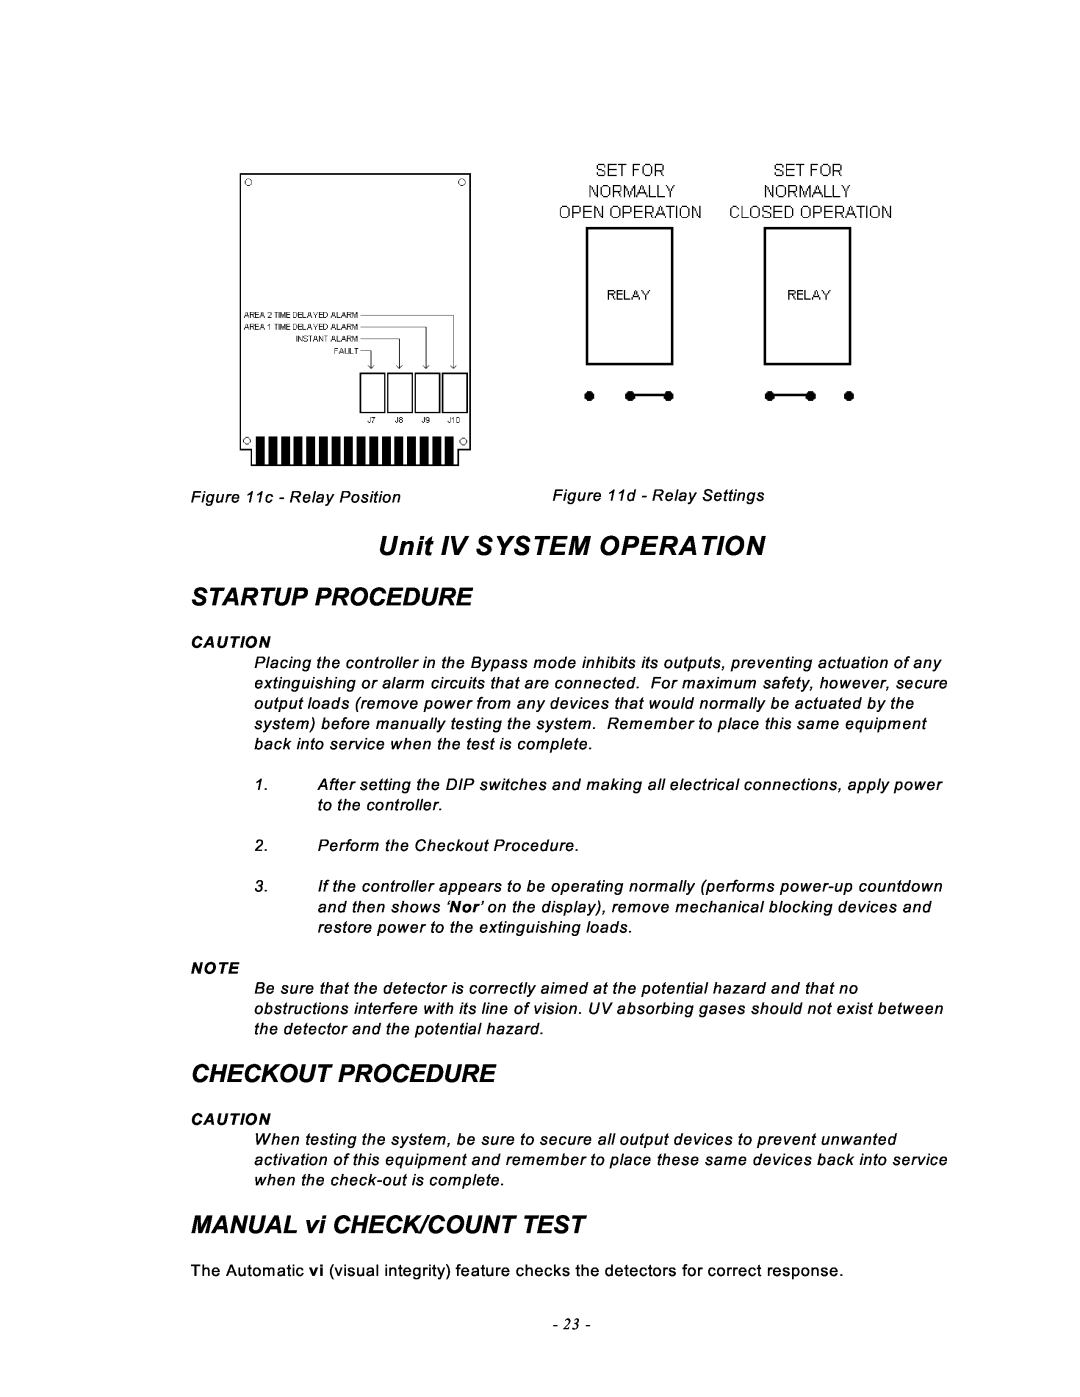 Emerson MAN -0016-00 manual Unit IV SYSTEM OPERATION, Startup Procedure, Checkout Procedure, MANUAL vi CHECK/COUNT TEST 